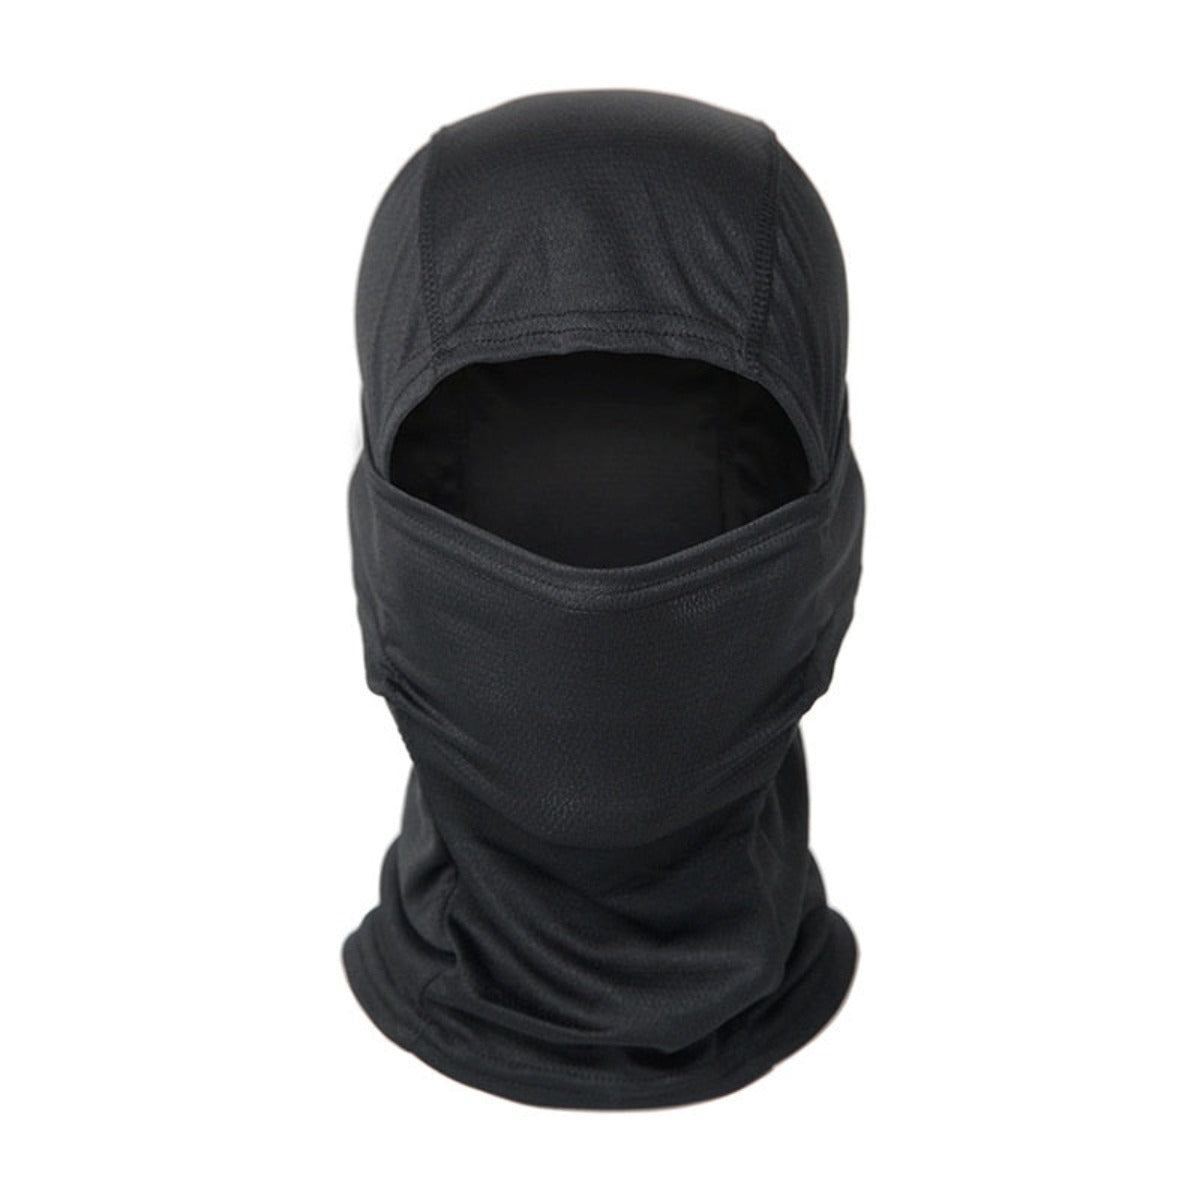 MultiCam Full Face Mask Cover - Pure Black